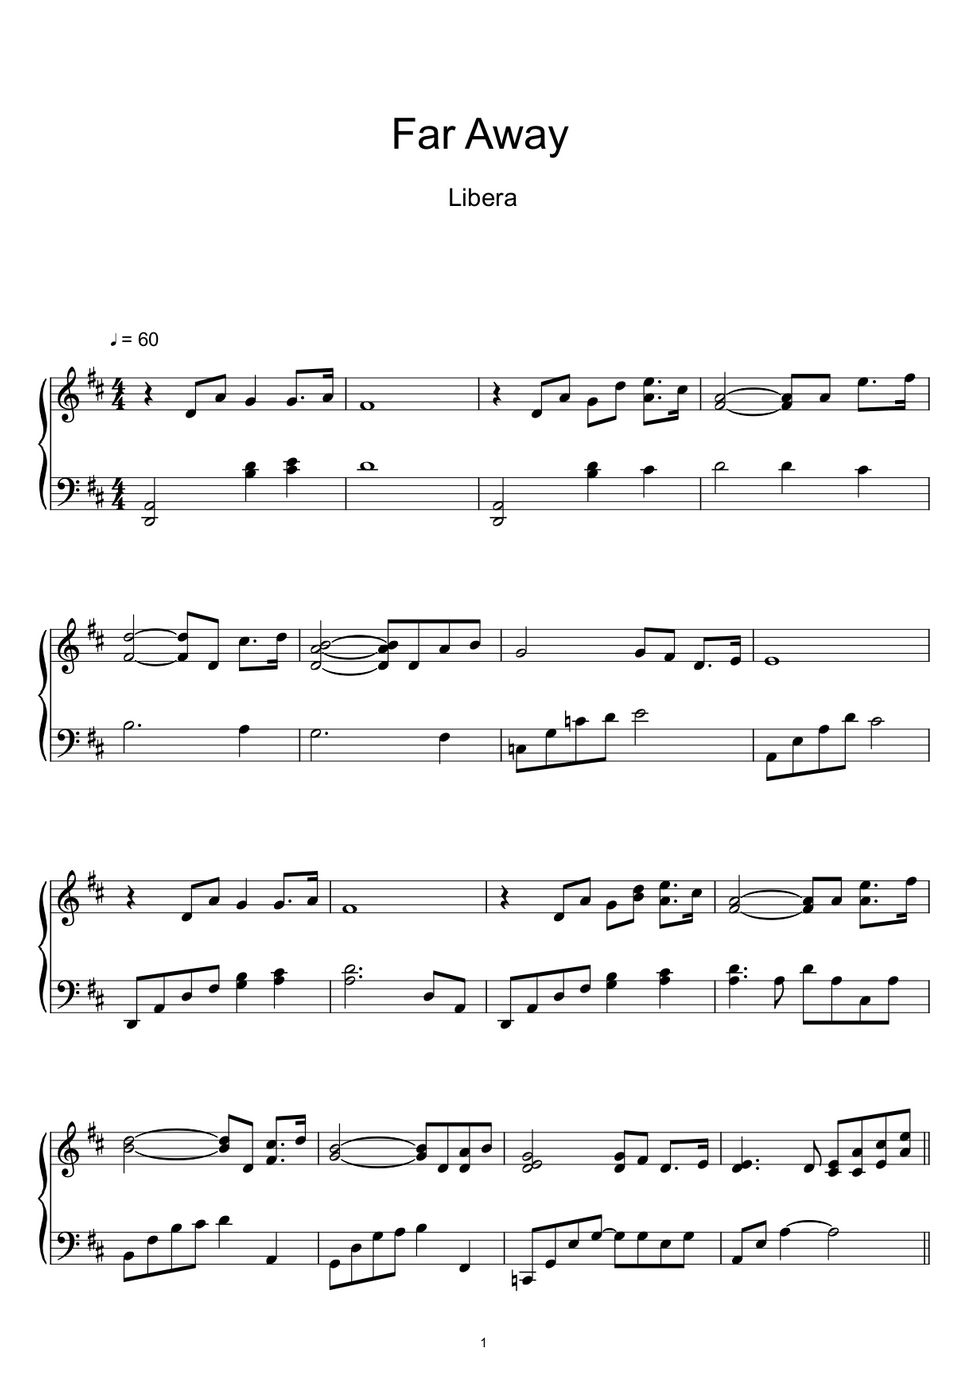 Libera - Far Away (Sheet Music, MIDI,) by sayu